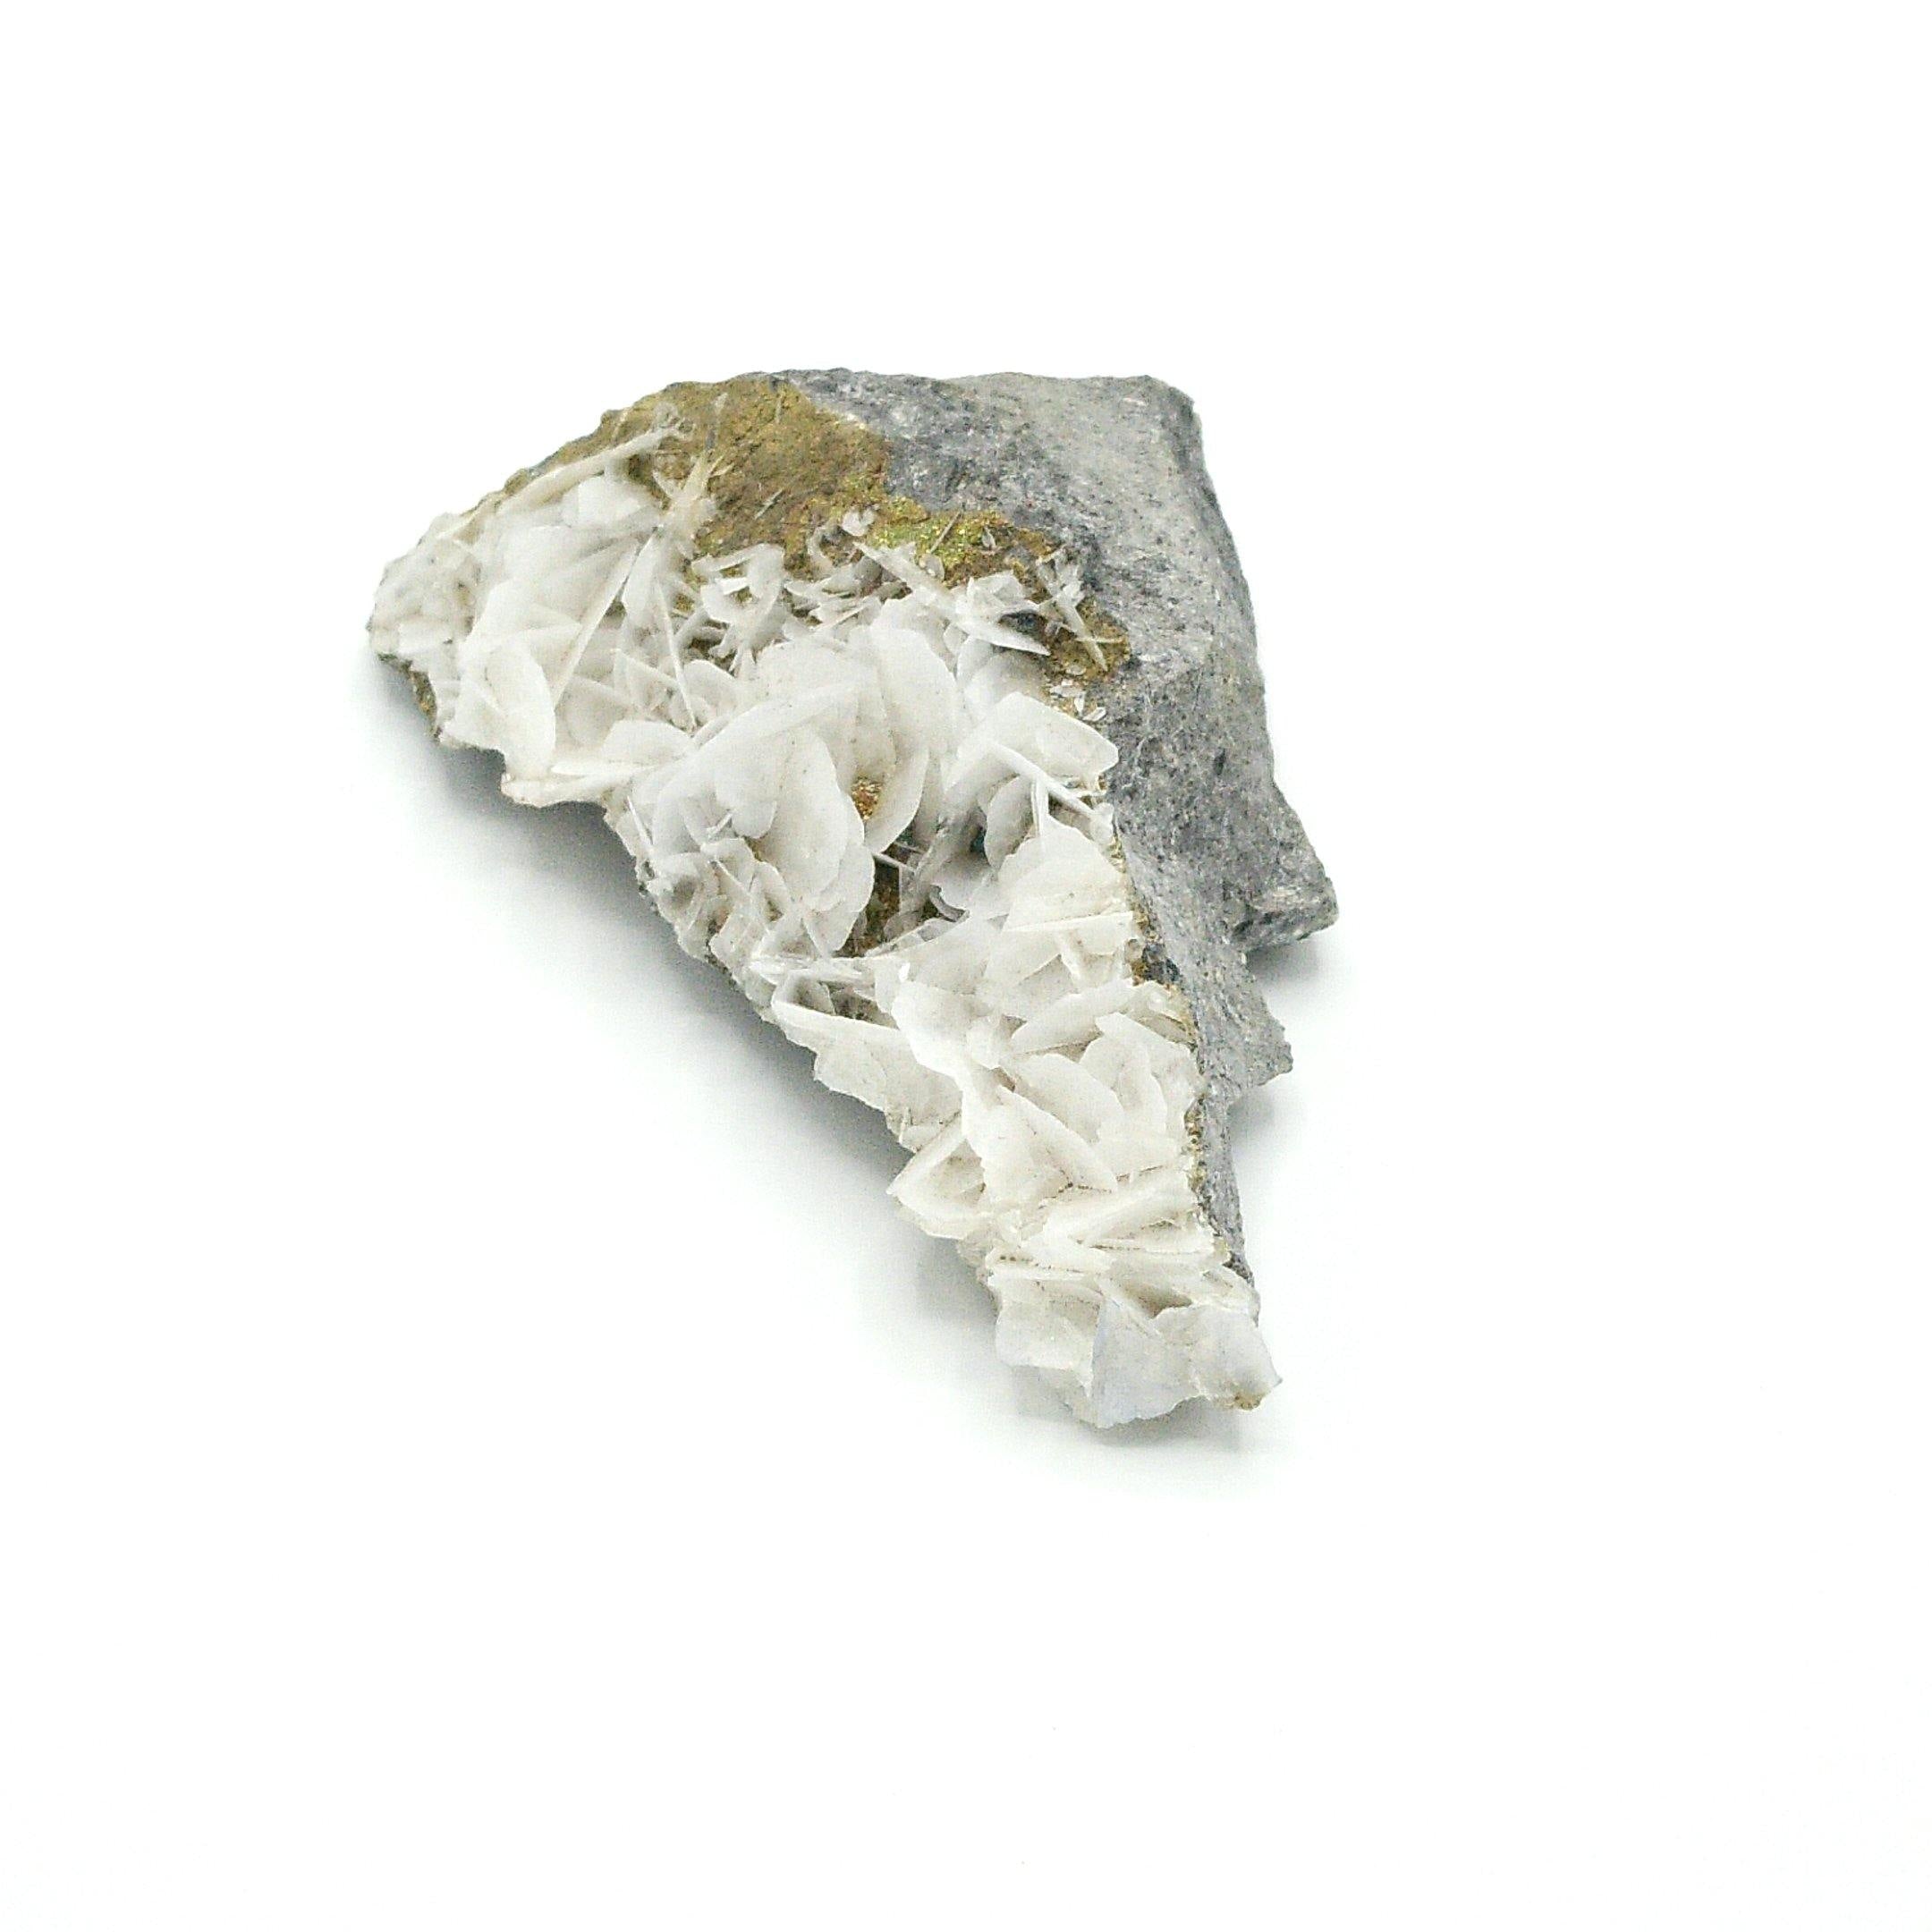 Angel Wing Calcite Specimen - The Rutile Ltd